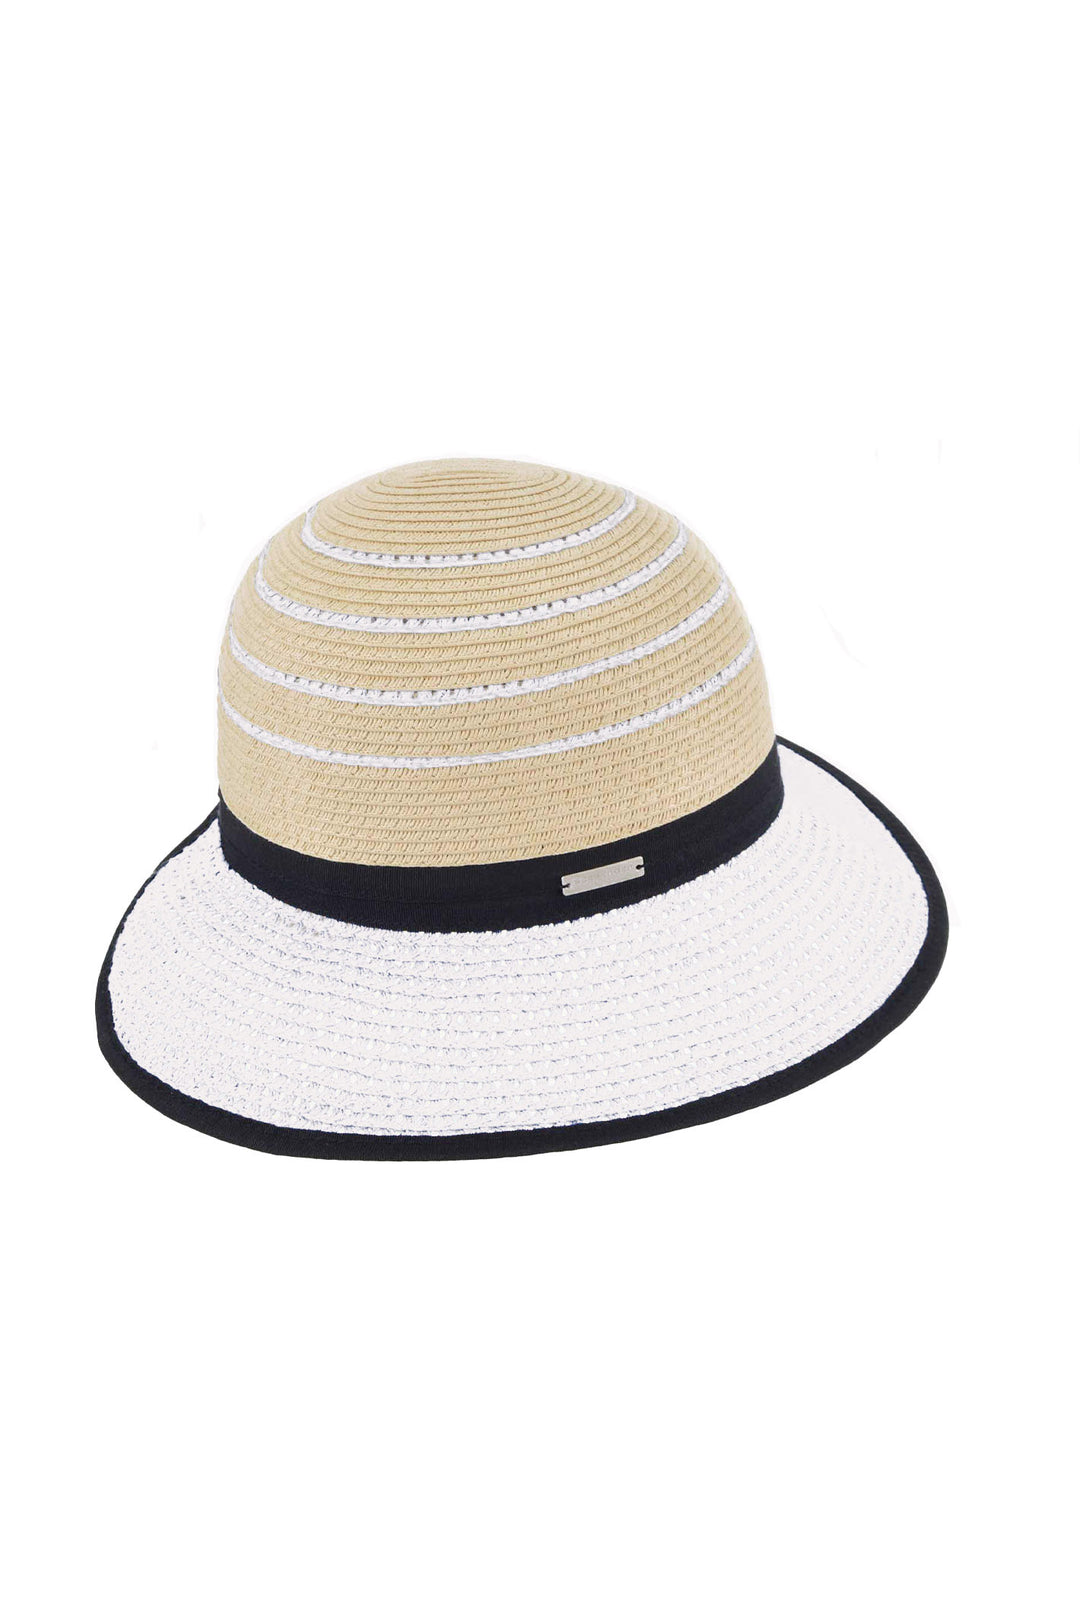 Seeberger 055275-00000 Linen White Natural Straw Summer Hat - Olivia Grace Fashion